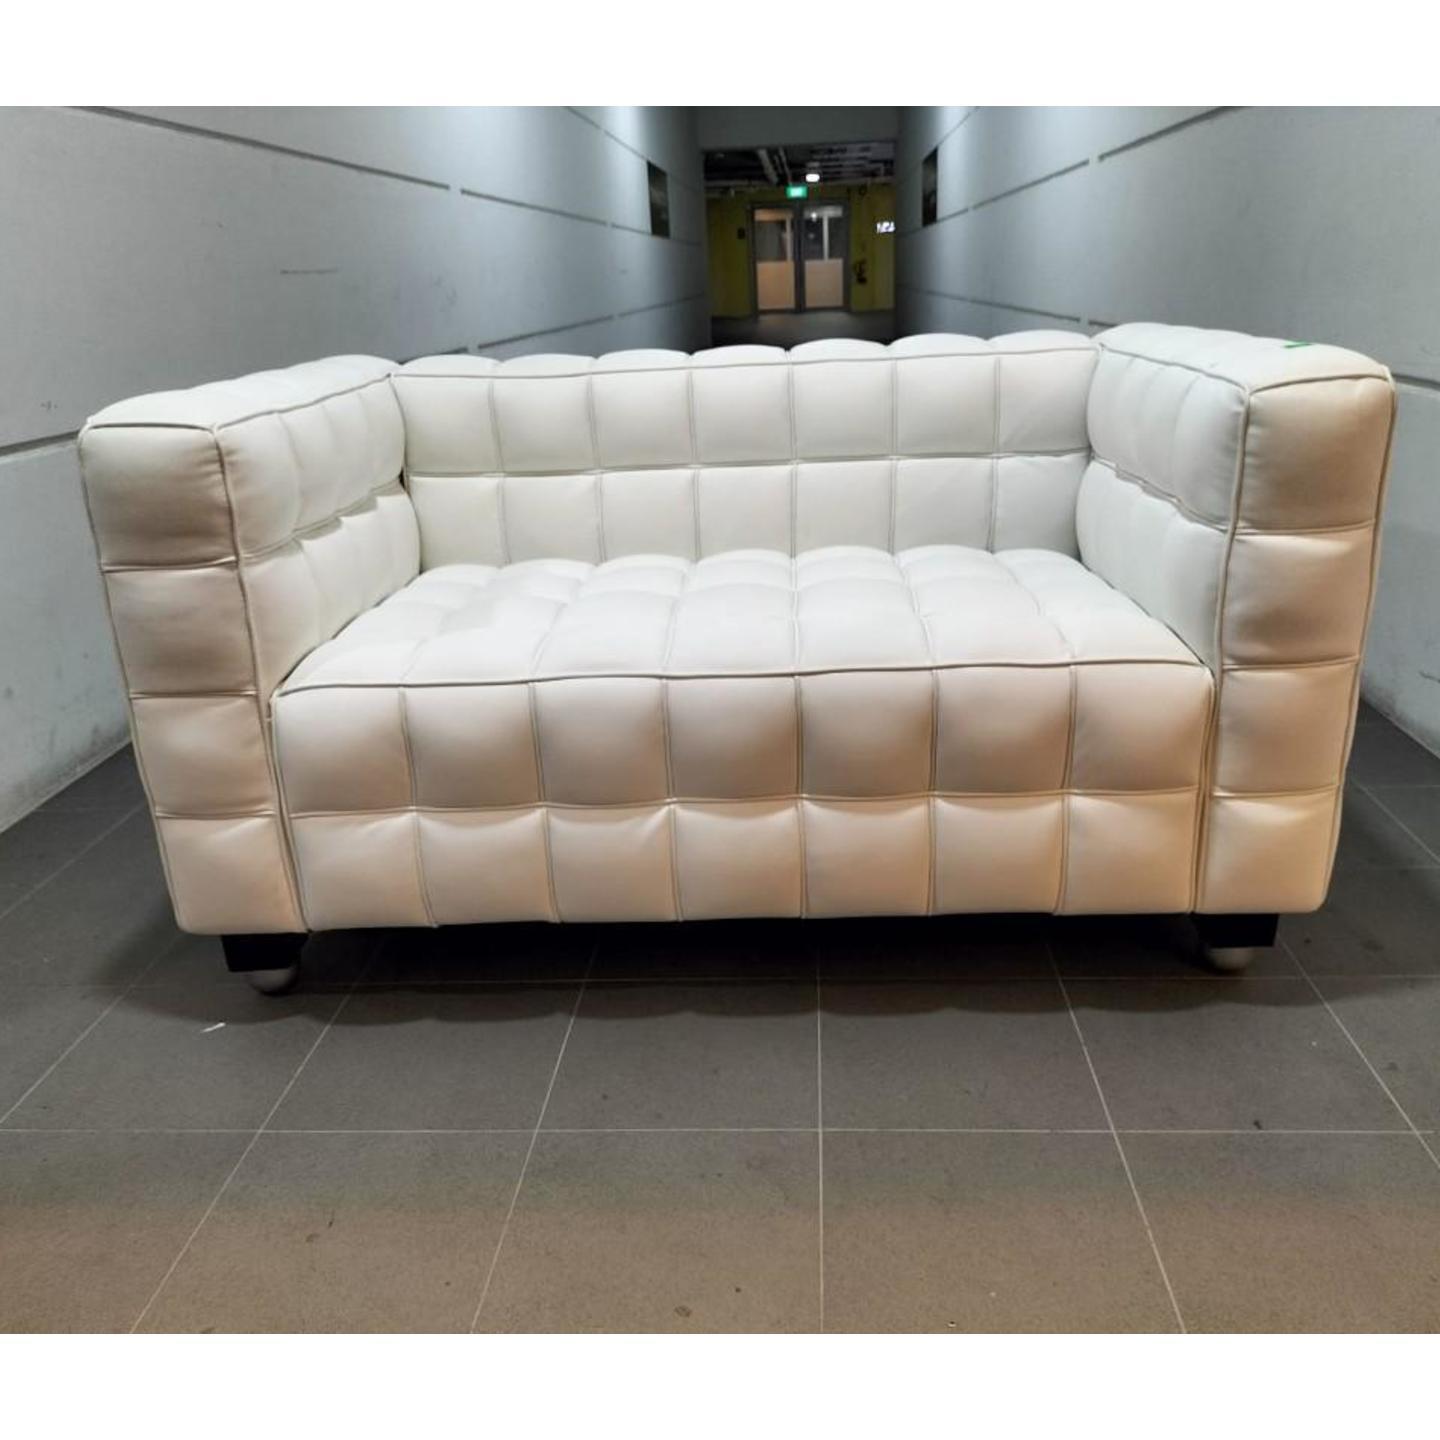 SERIZE 2 Seater Sofa in White PU Leather